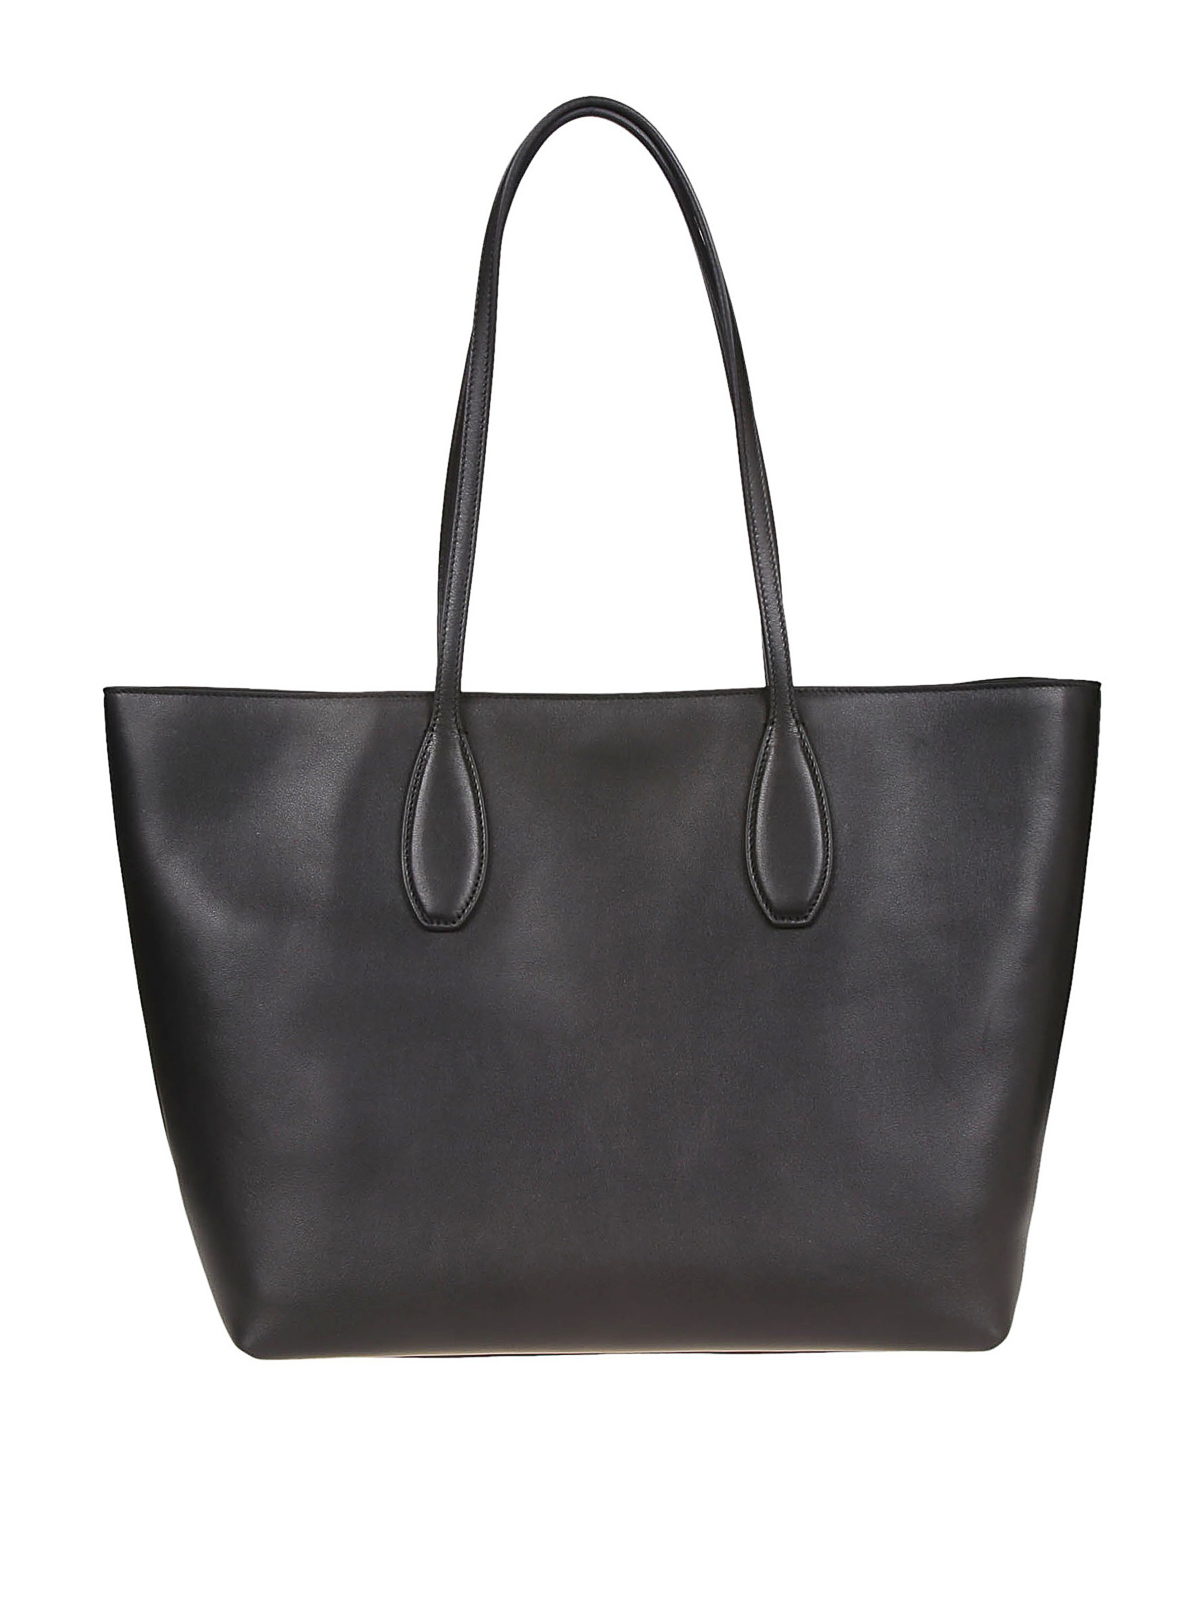 Totes bags Salvatore Ferragamo - Studio black leather tote - 21H655709659